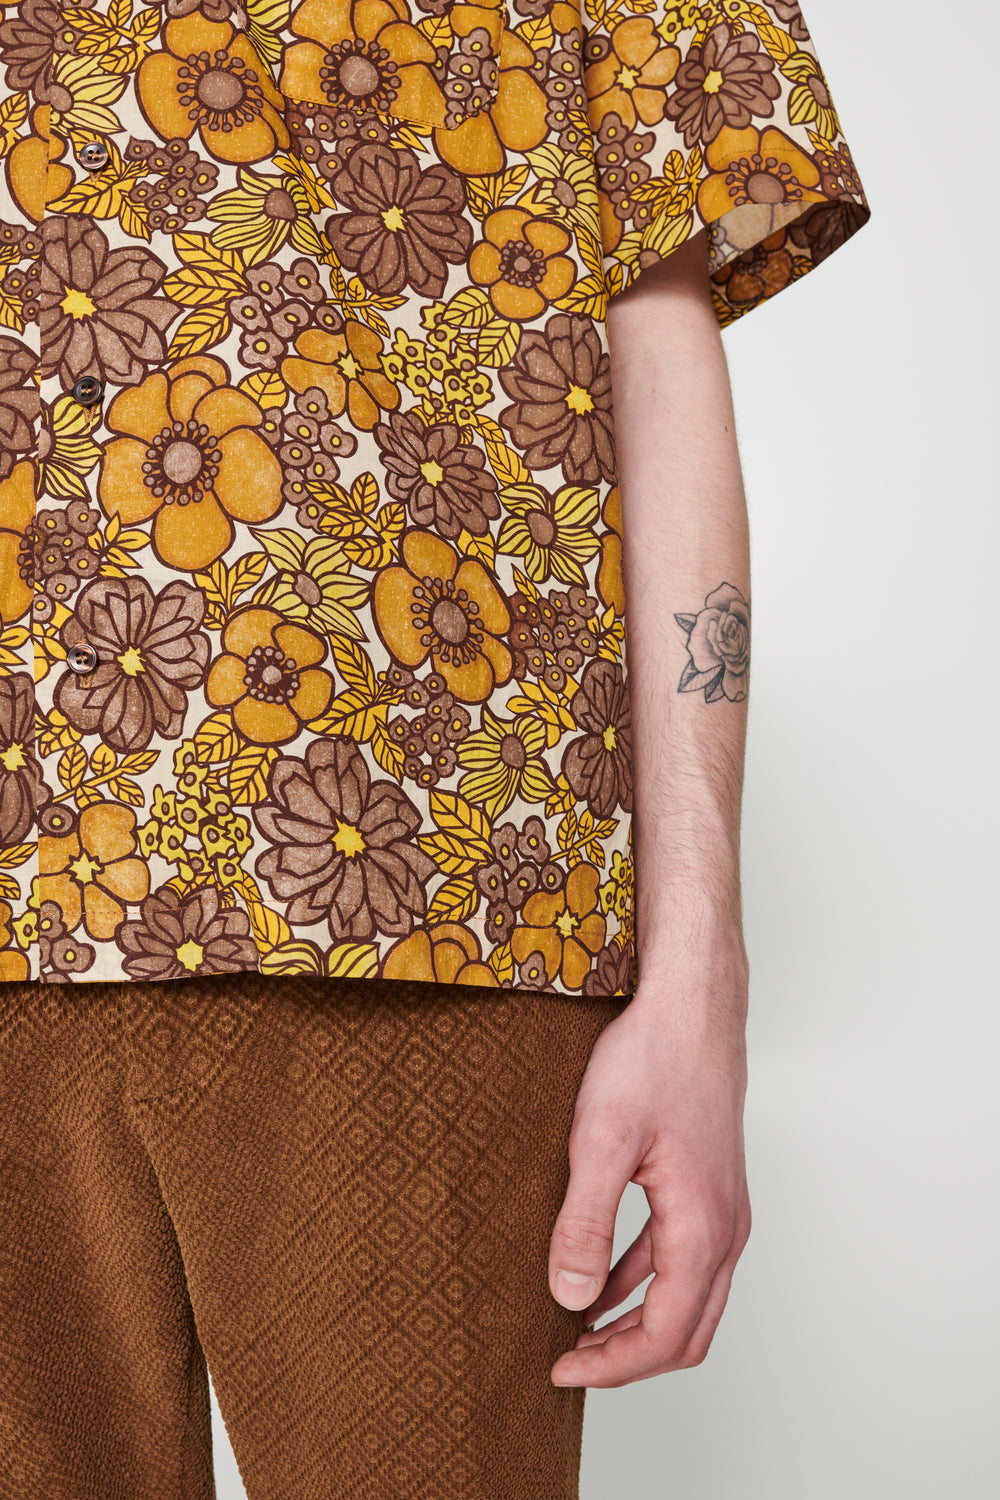 Sol camp collar shirt floral/print